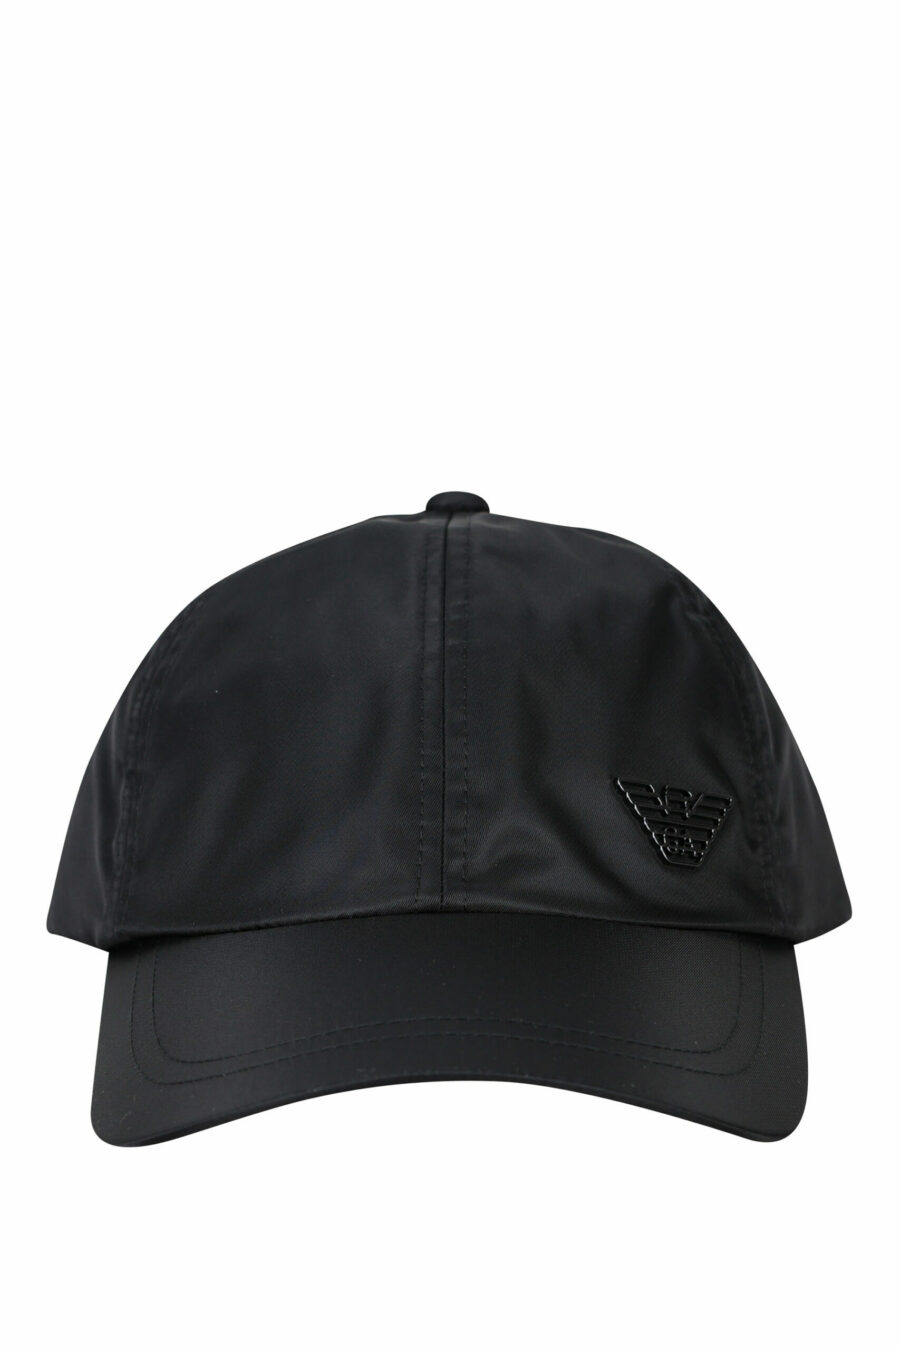 Black cap with black metal eagle logo - 8057767767730 scaled